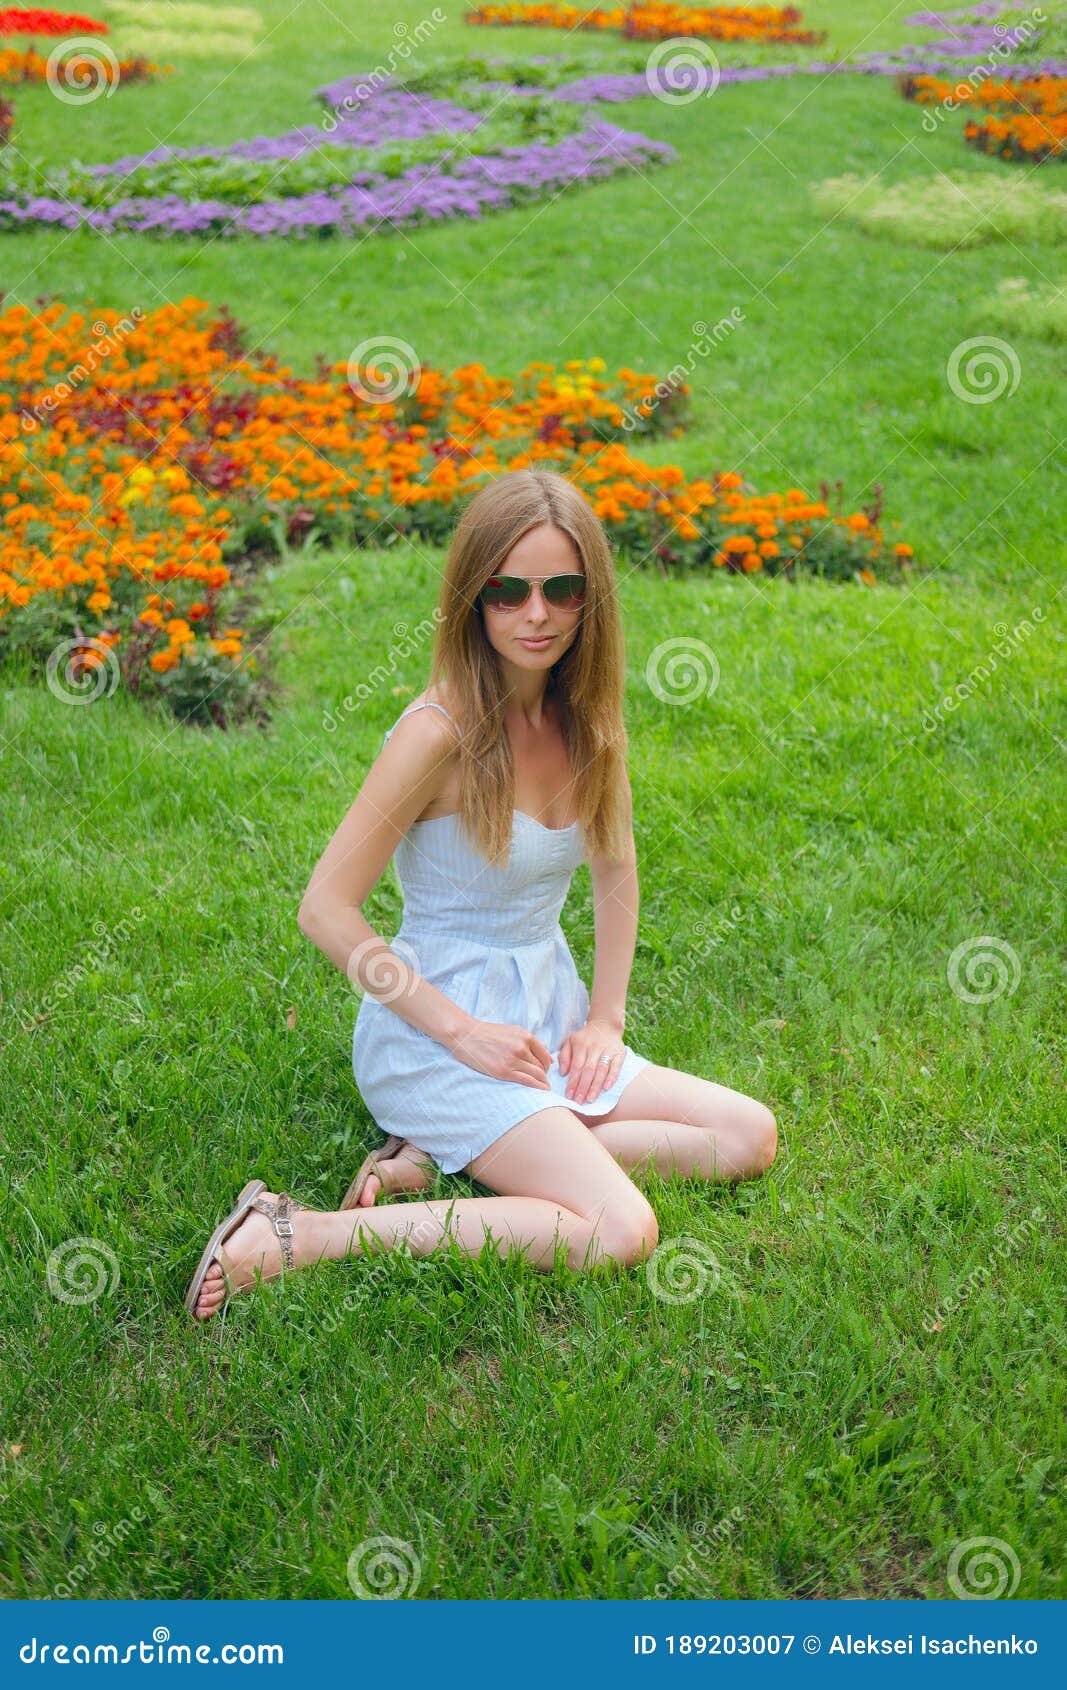 Pretty Girl in Short Blue Dress on Gras in Summer Park Stock Image ...